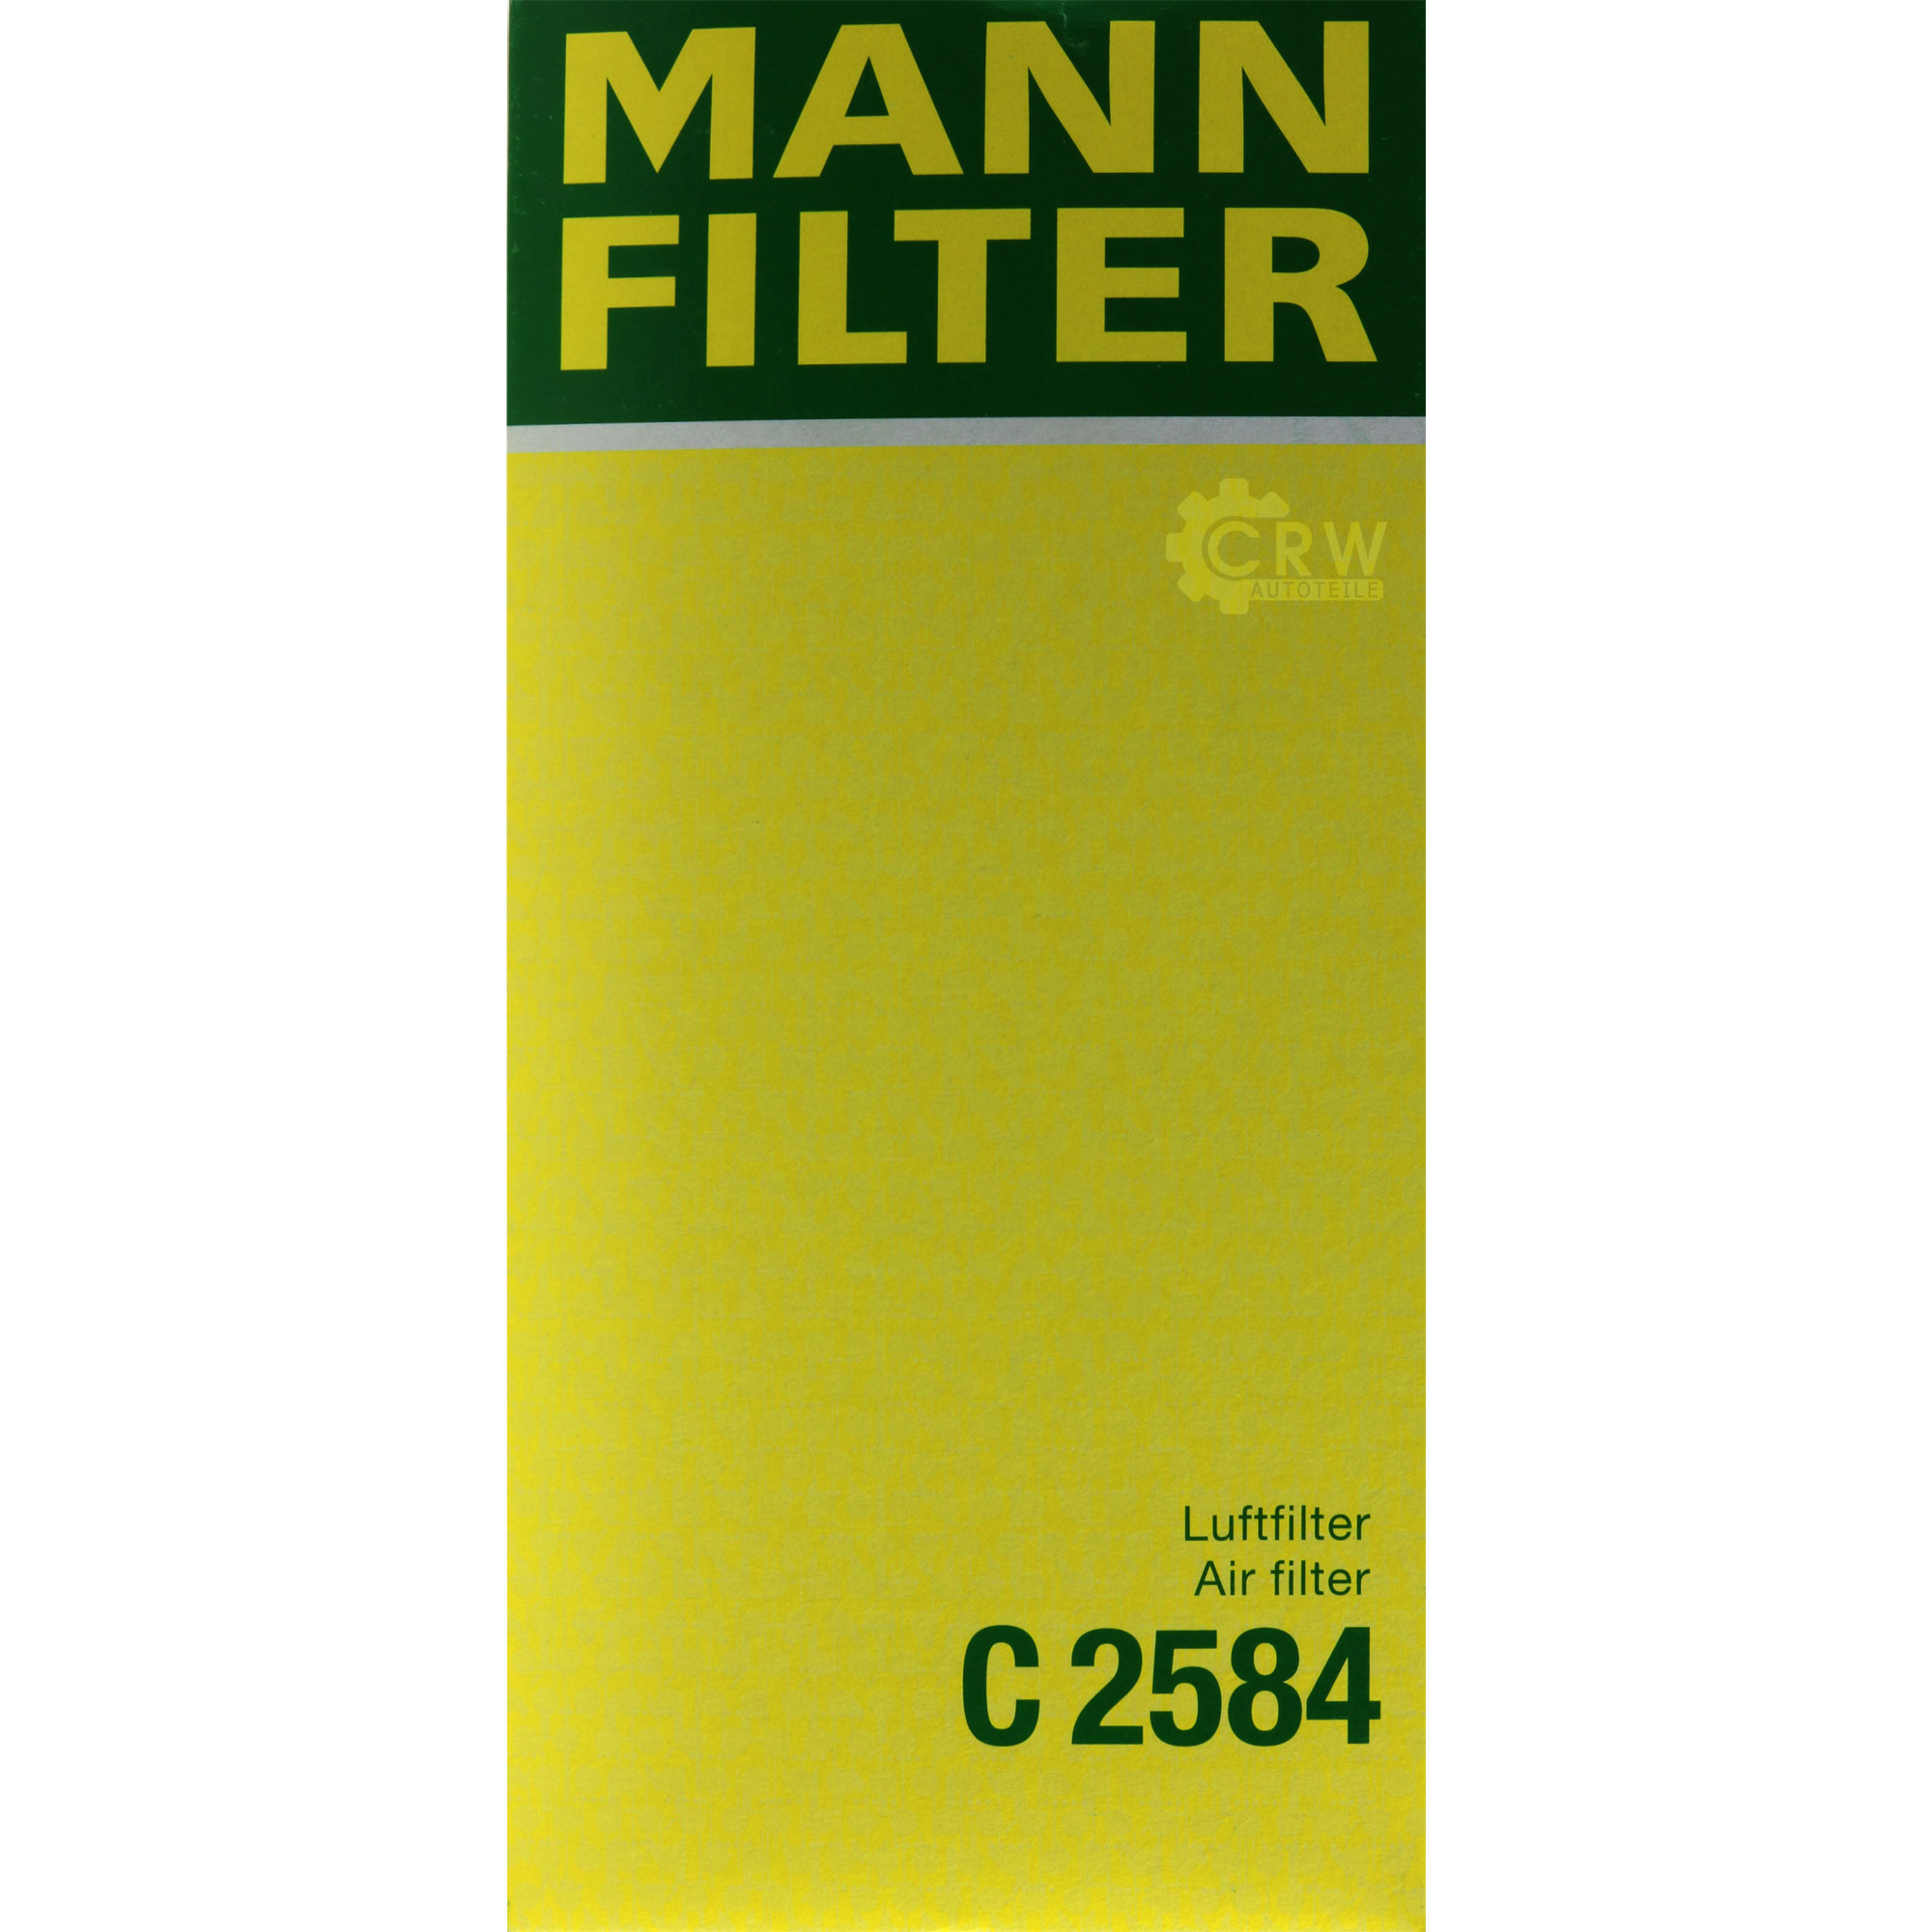 MANN-FILTER Luftfilter für Mitsubishi Colt VI Z3_A Z2_A 1.3 1.1 RG 1.5 Smart